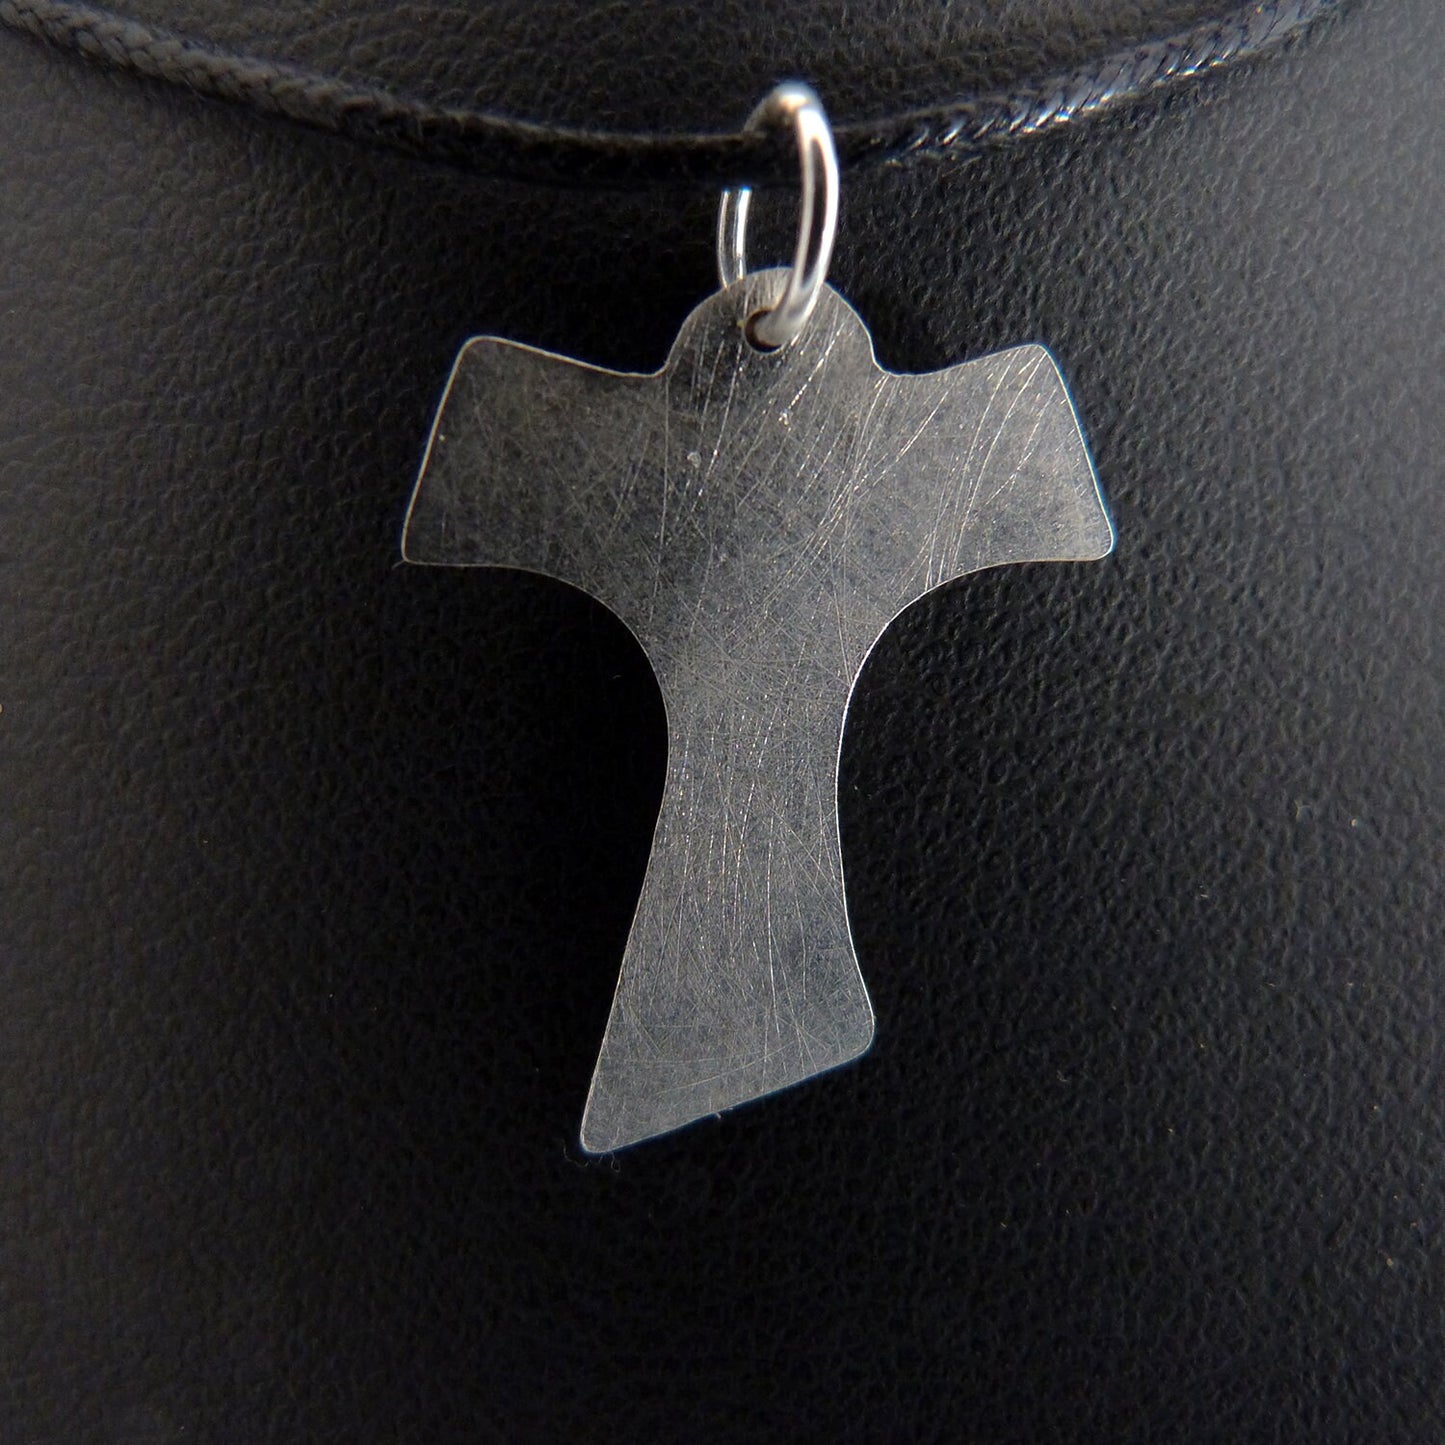 Tau silver pendant from the Camino de Santiago